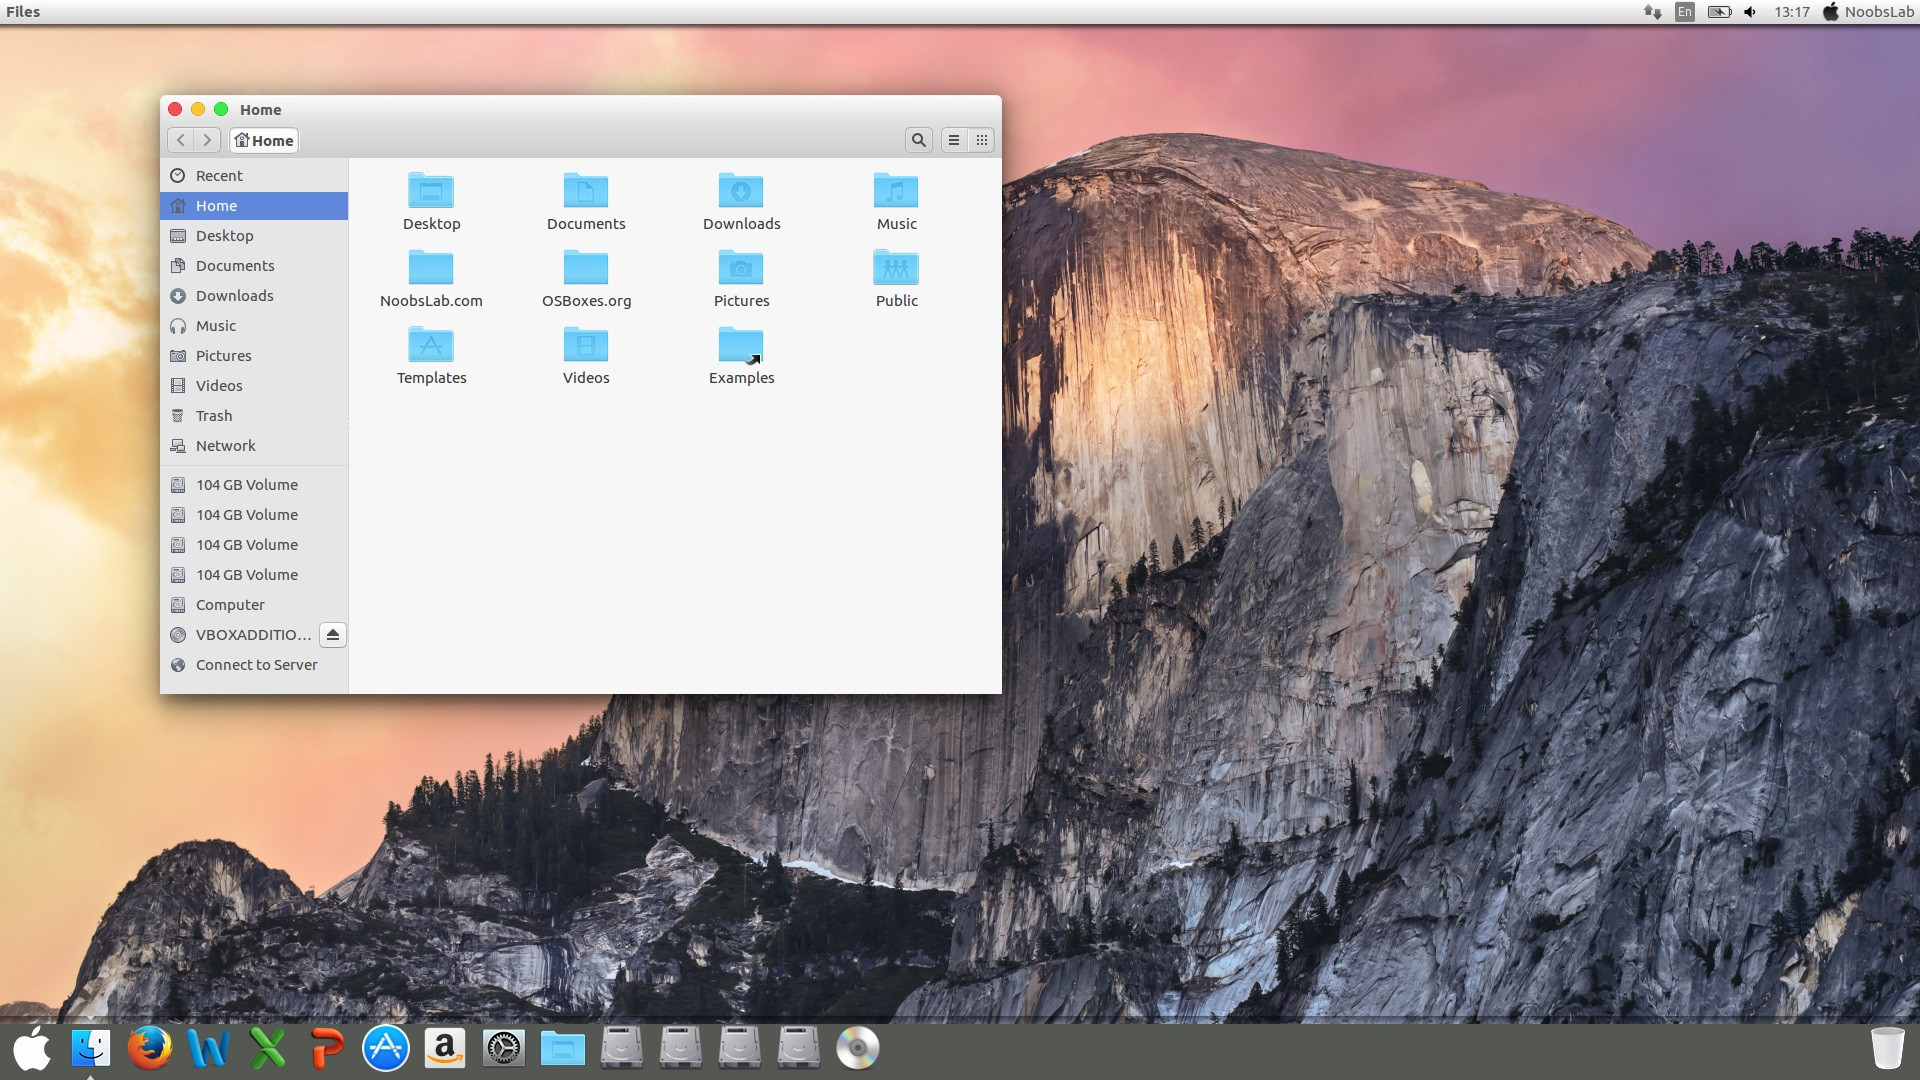 Download Mac Icons For Ubuntu